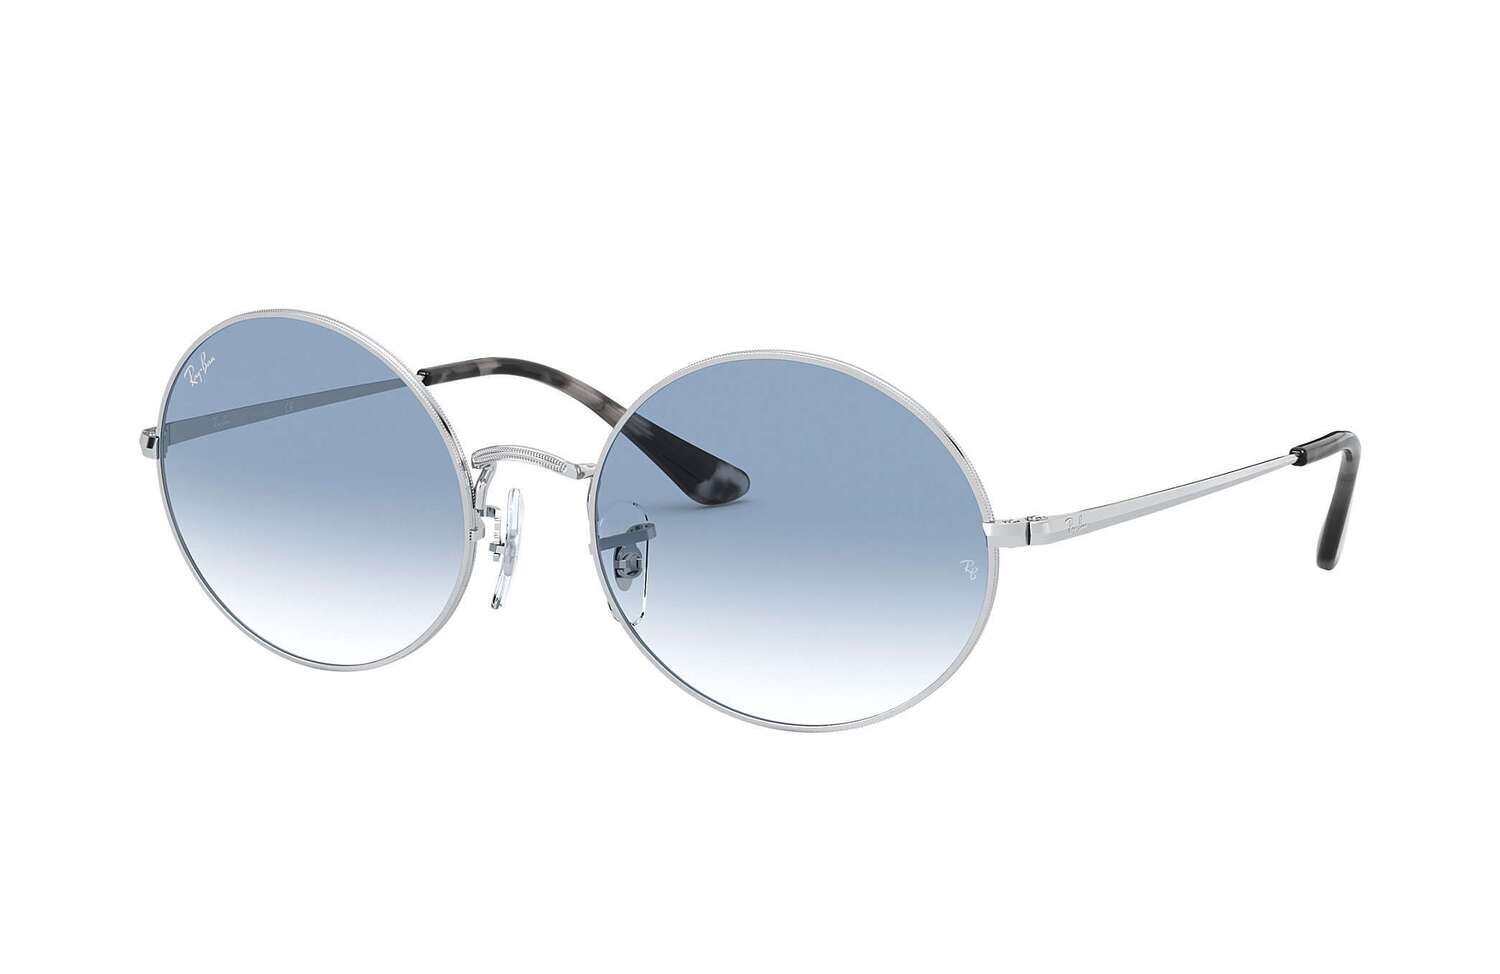 Ray ban OVAL 1970 91493F silver / light blue occhiali